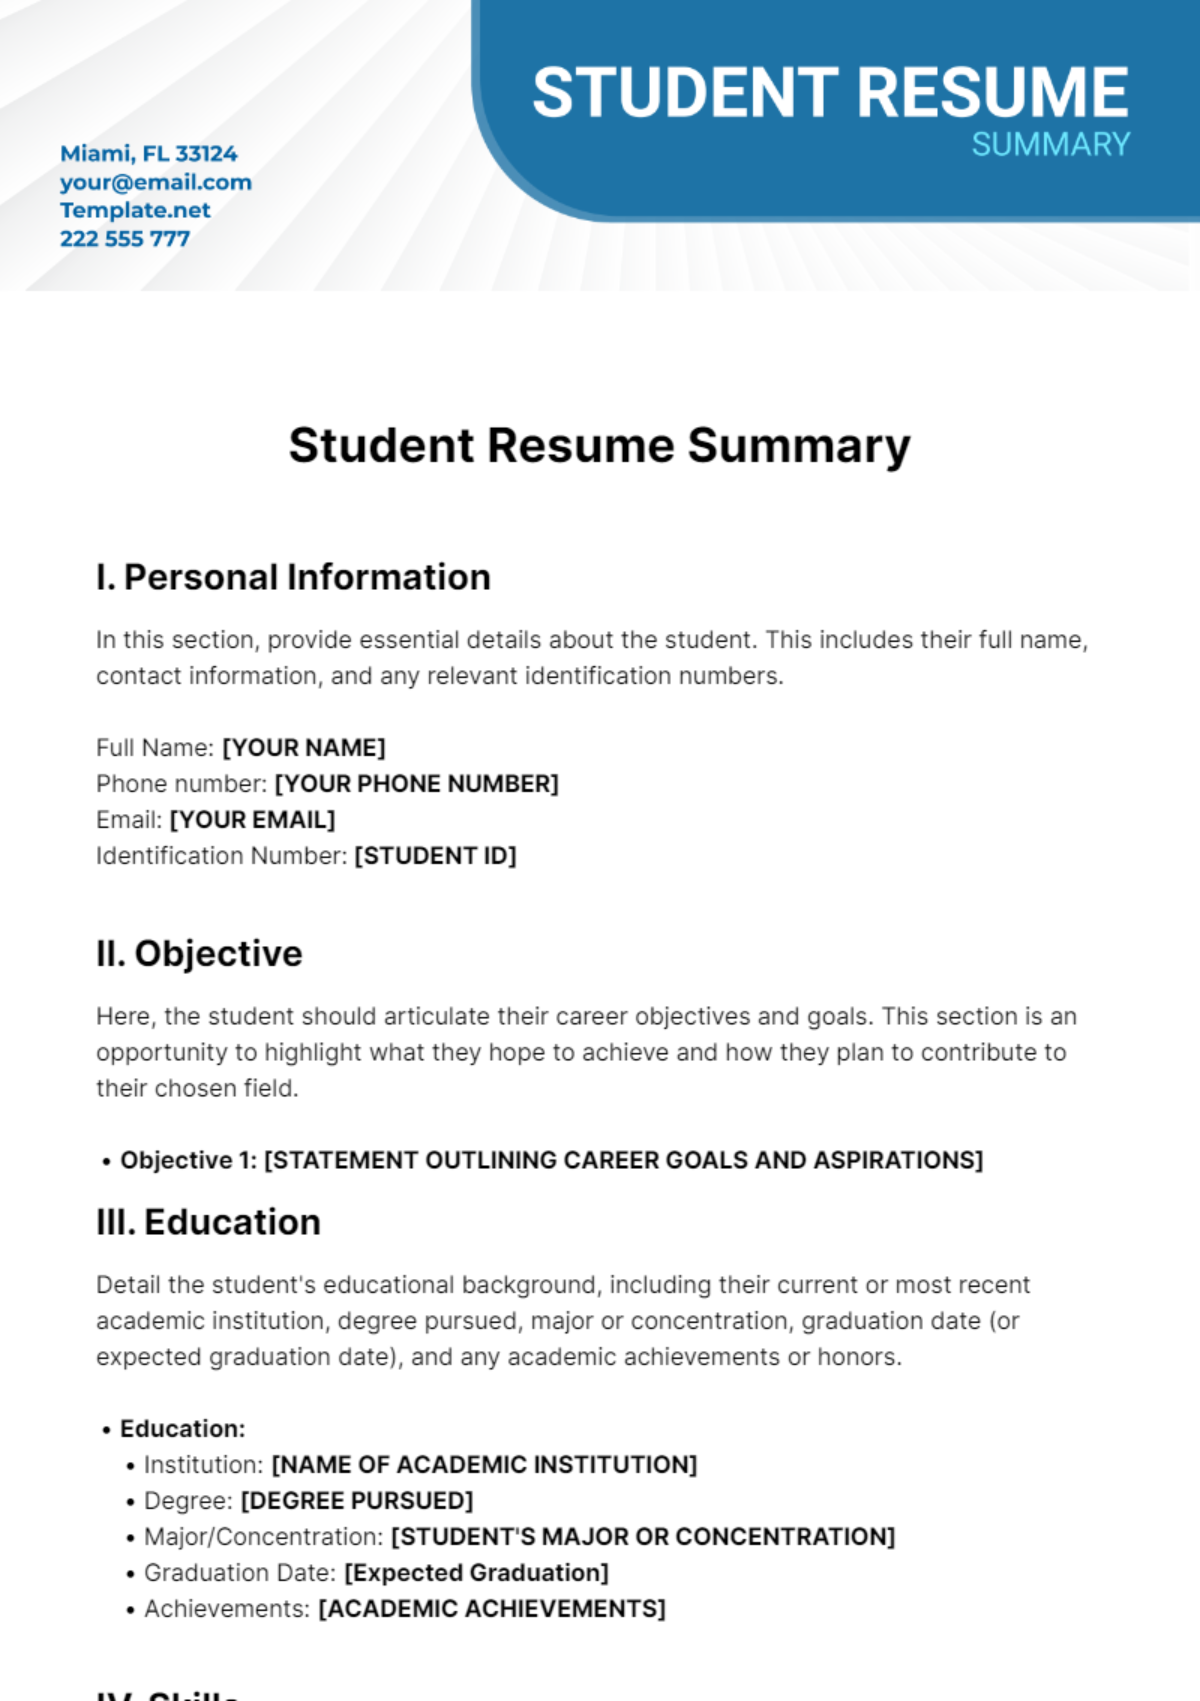 Free Student Resume Summary Template